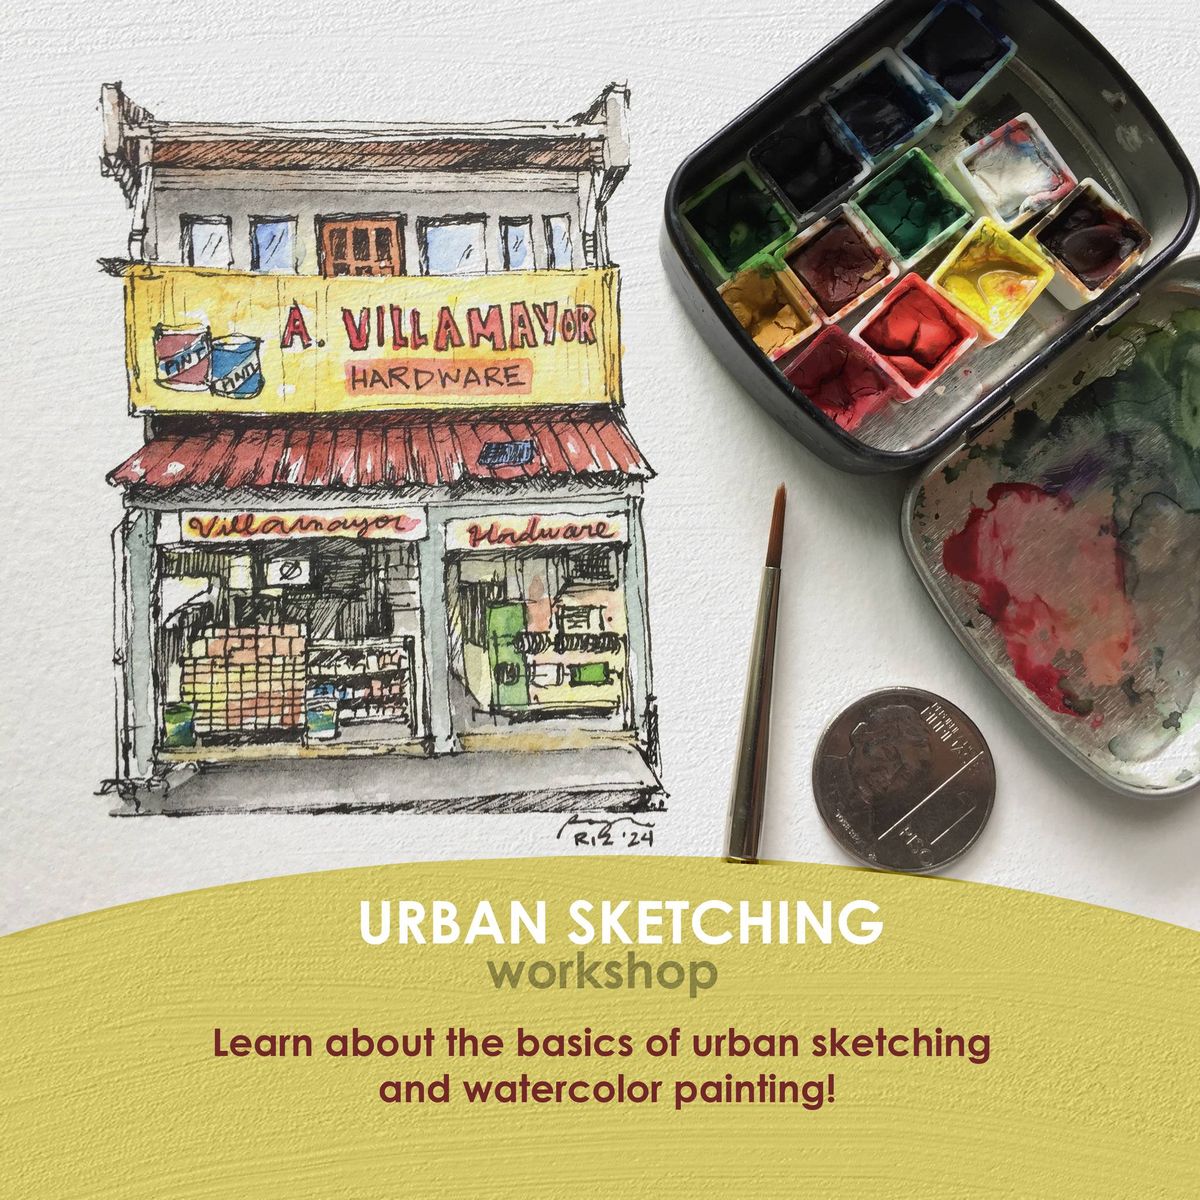 Urban Sketching and Watercolor Painting Workshop